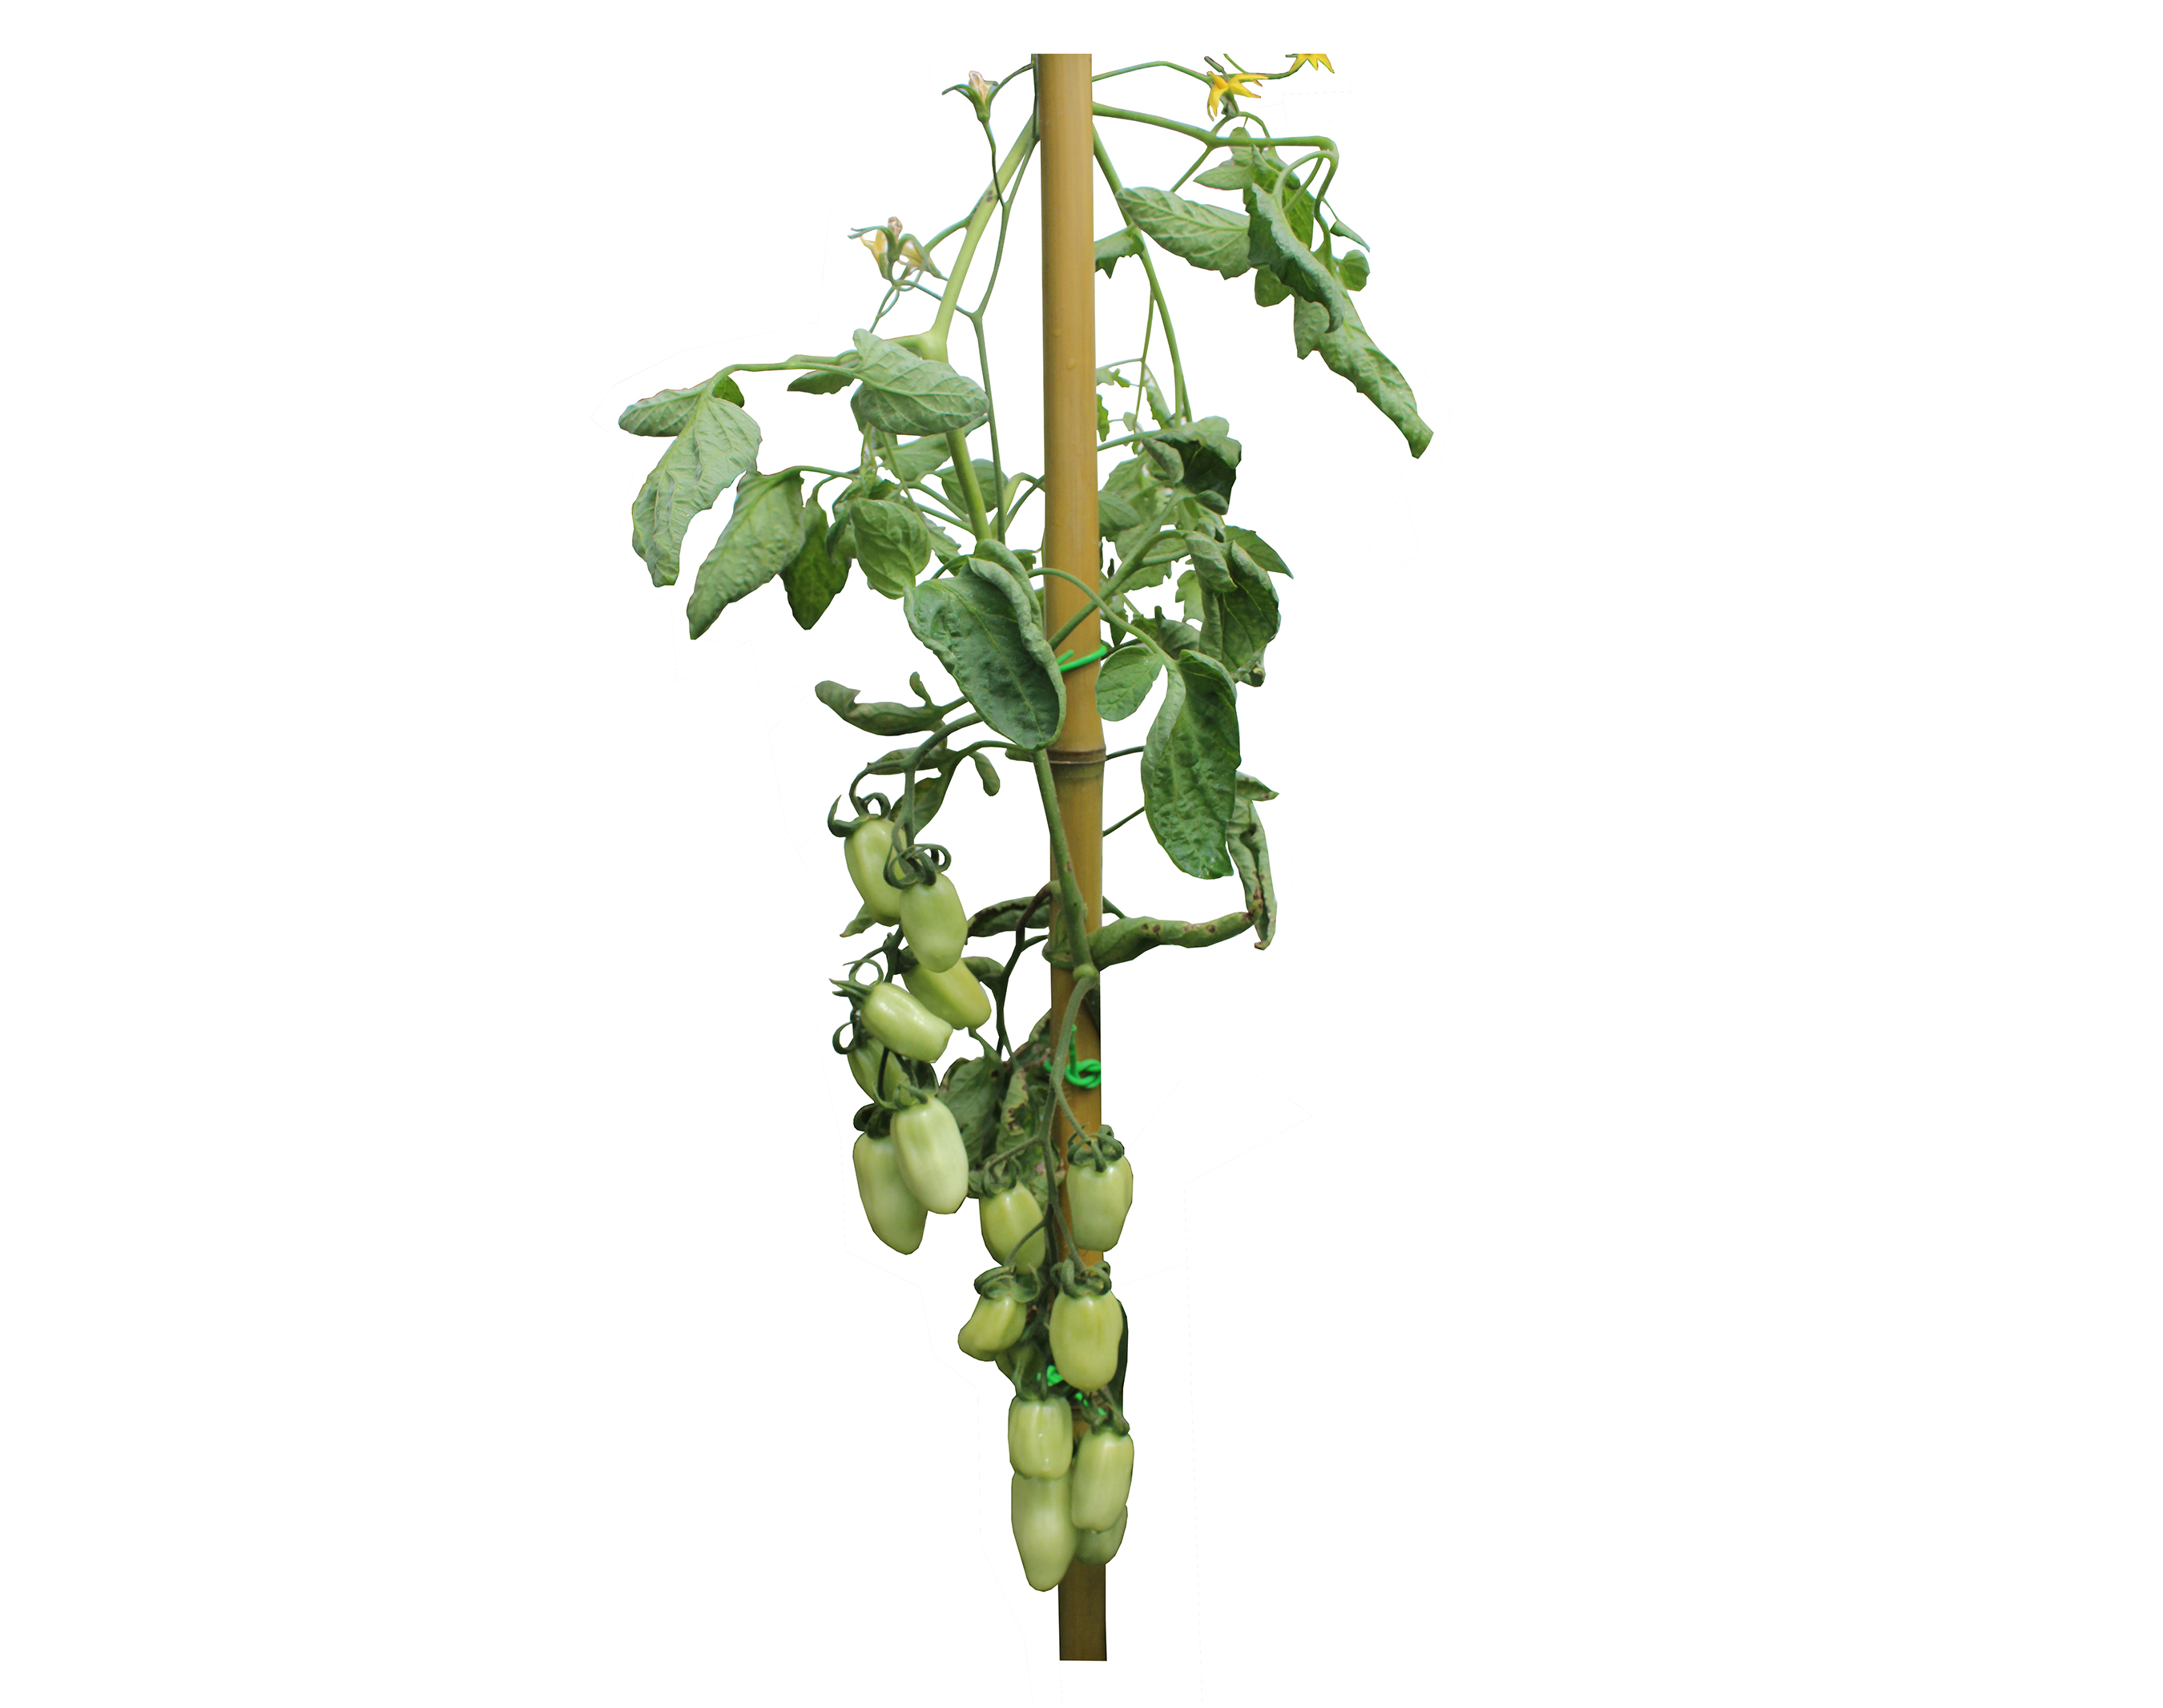 Sensory Composition – San Marzano Tomato Plant